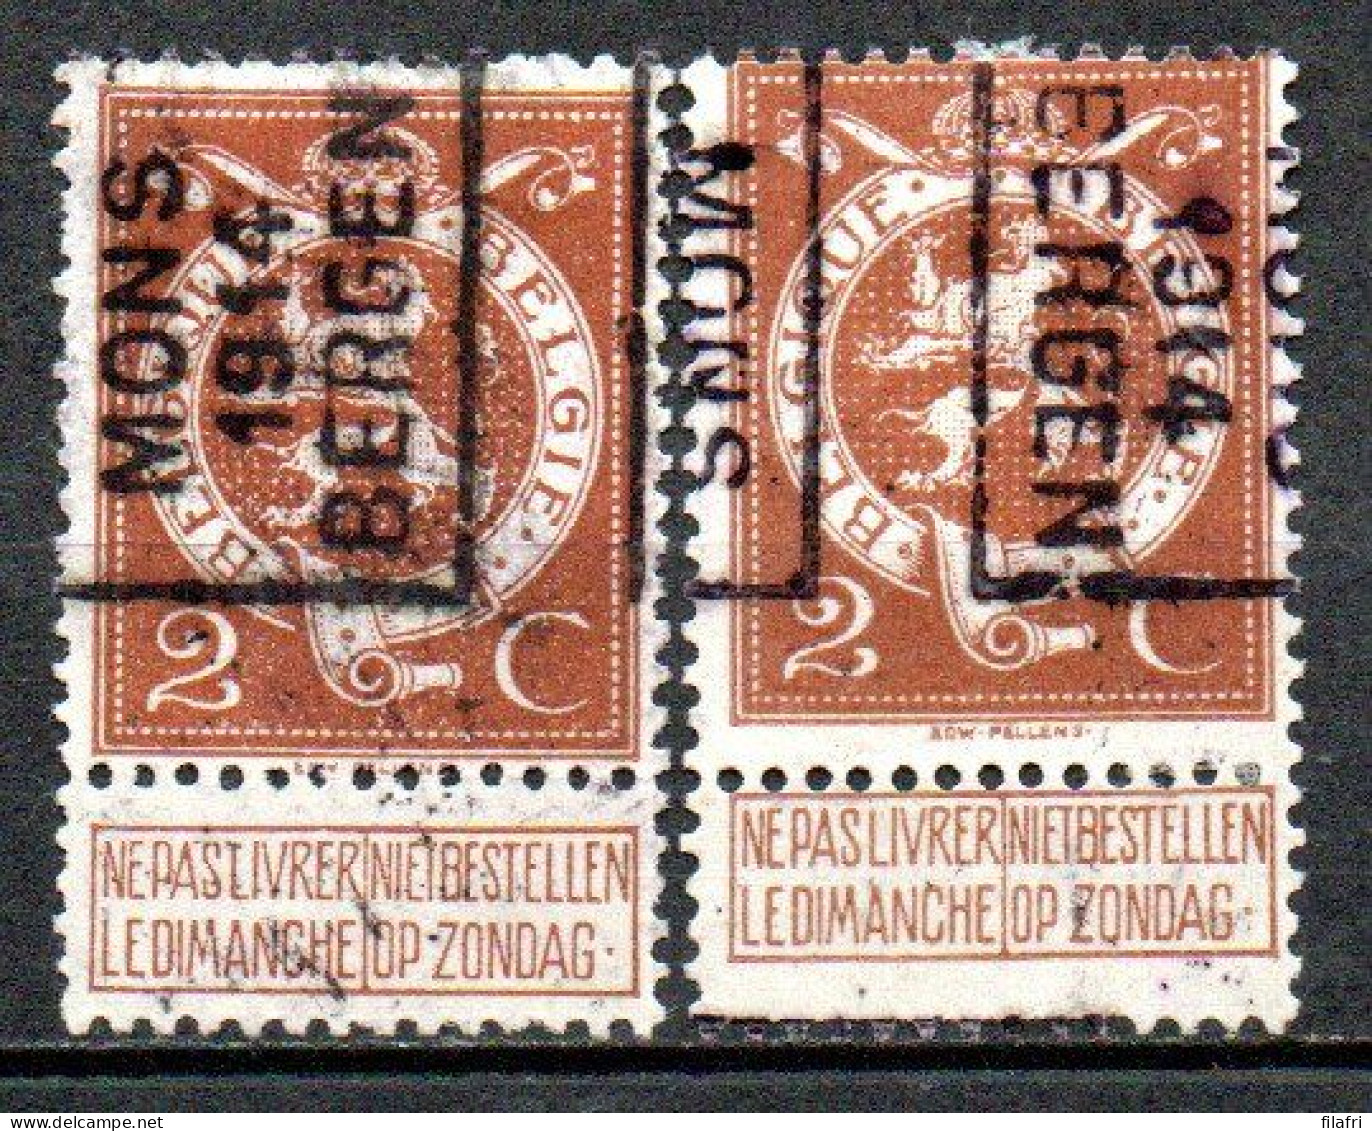 2367 Voorafstempeling Op Nr 109 - MONS 1914 BERGEN - Positie A & B - Rollenmarken 1910-19